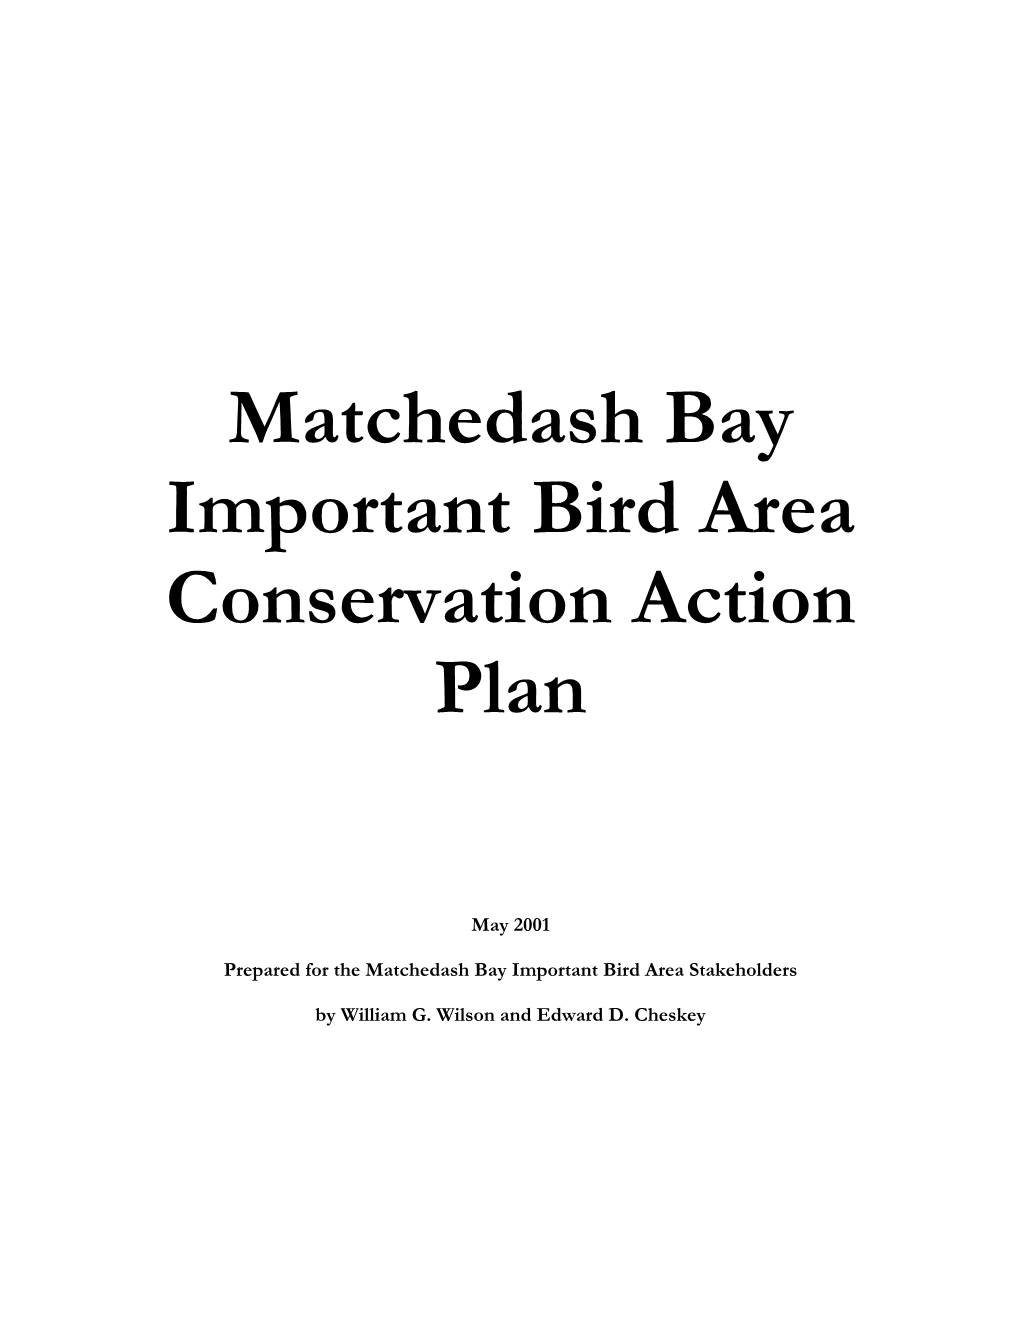 Matchedash Bay Important Bird Area Conservation Action Plan